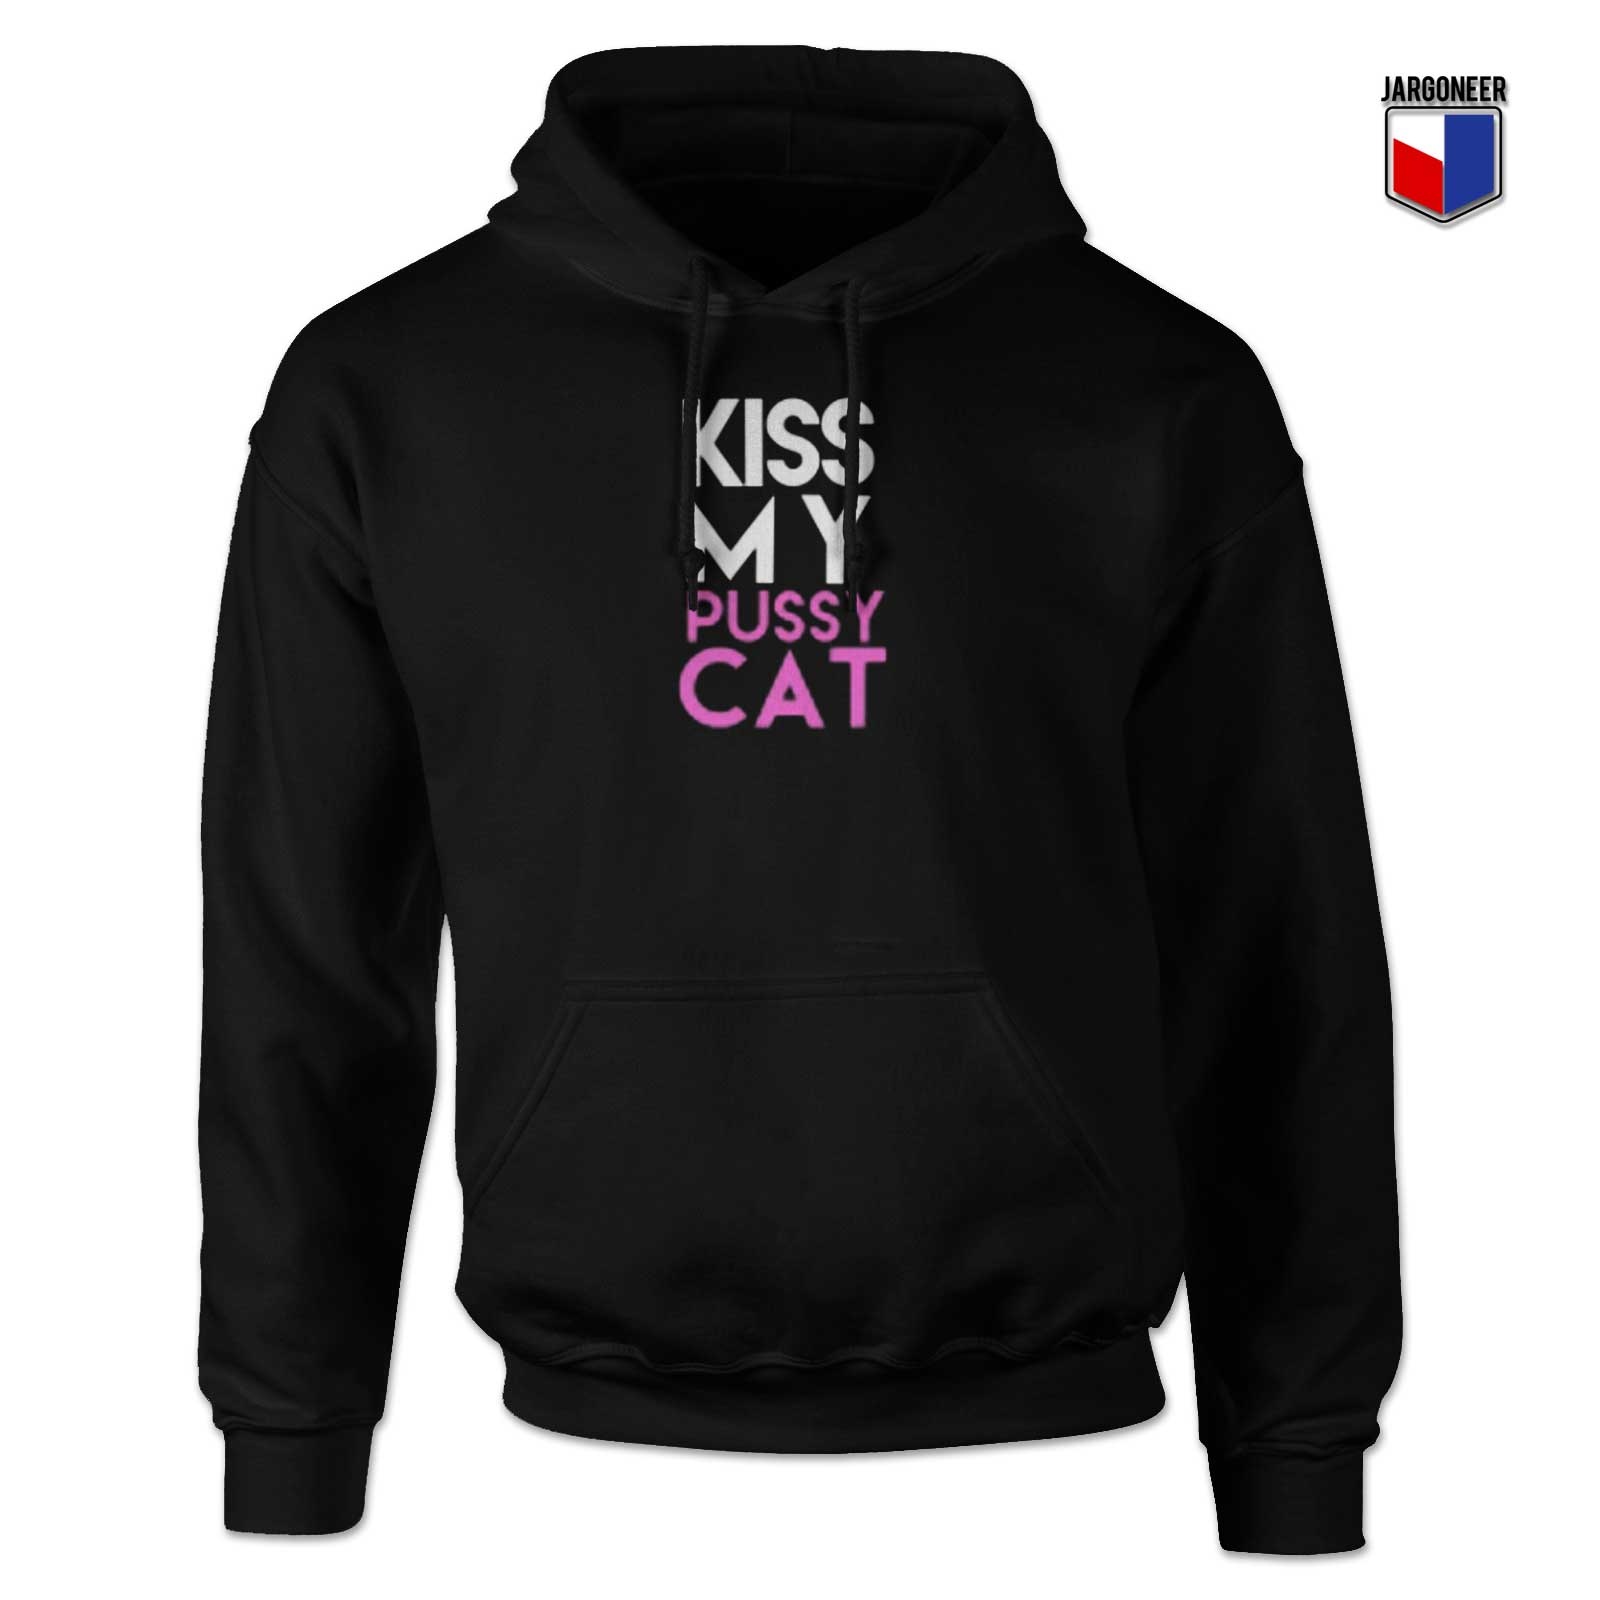 Kiss My Pussy Cat Hoodie - Shop Unique Graphic Cool Shirt Designs